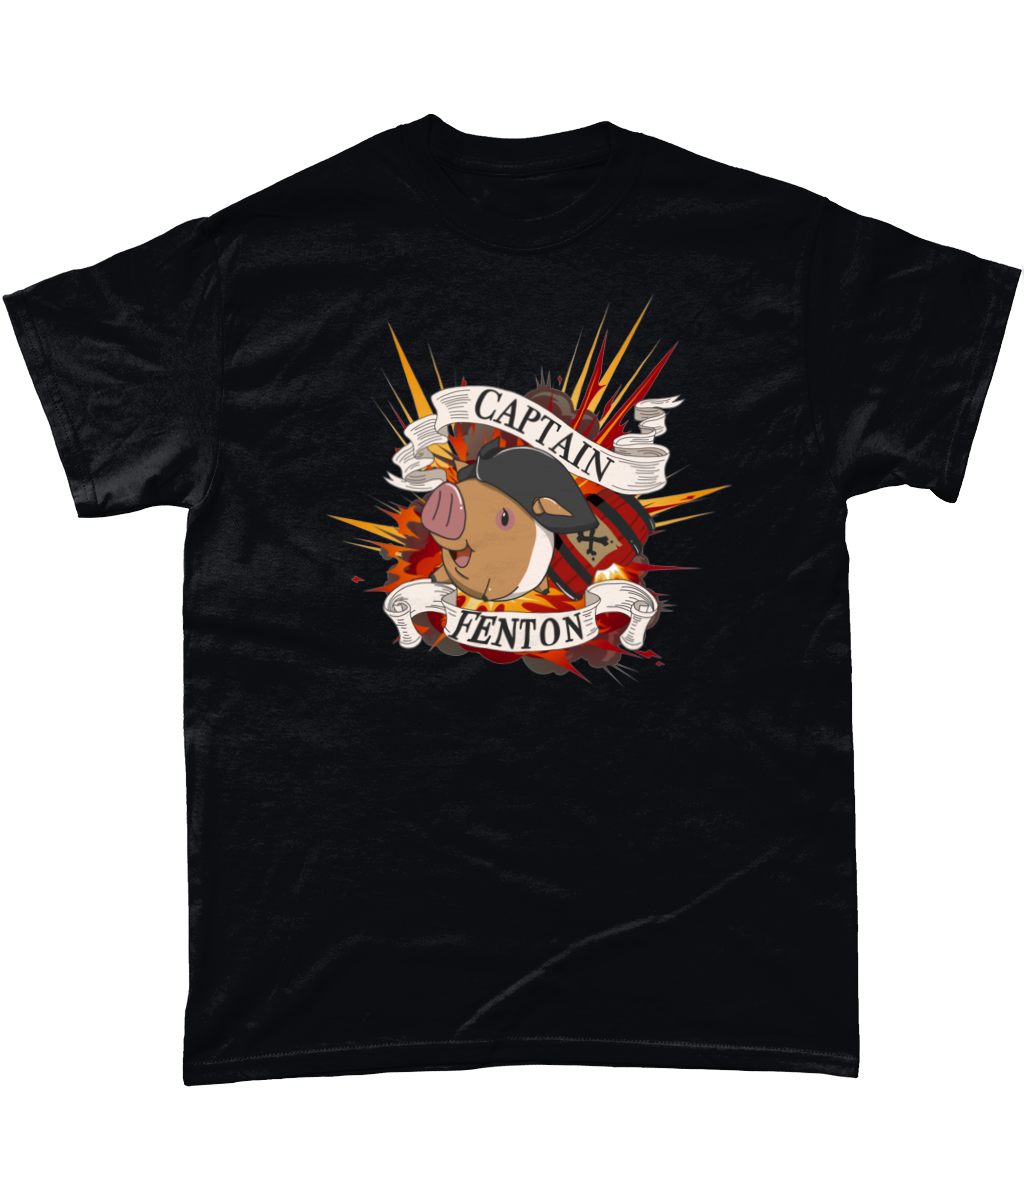 Rob Raven T-Shirt 'Captain Fenton Explosion'